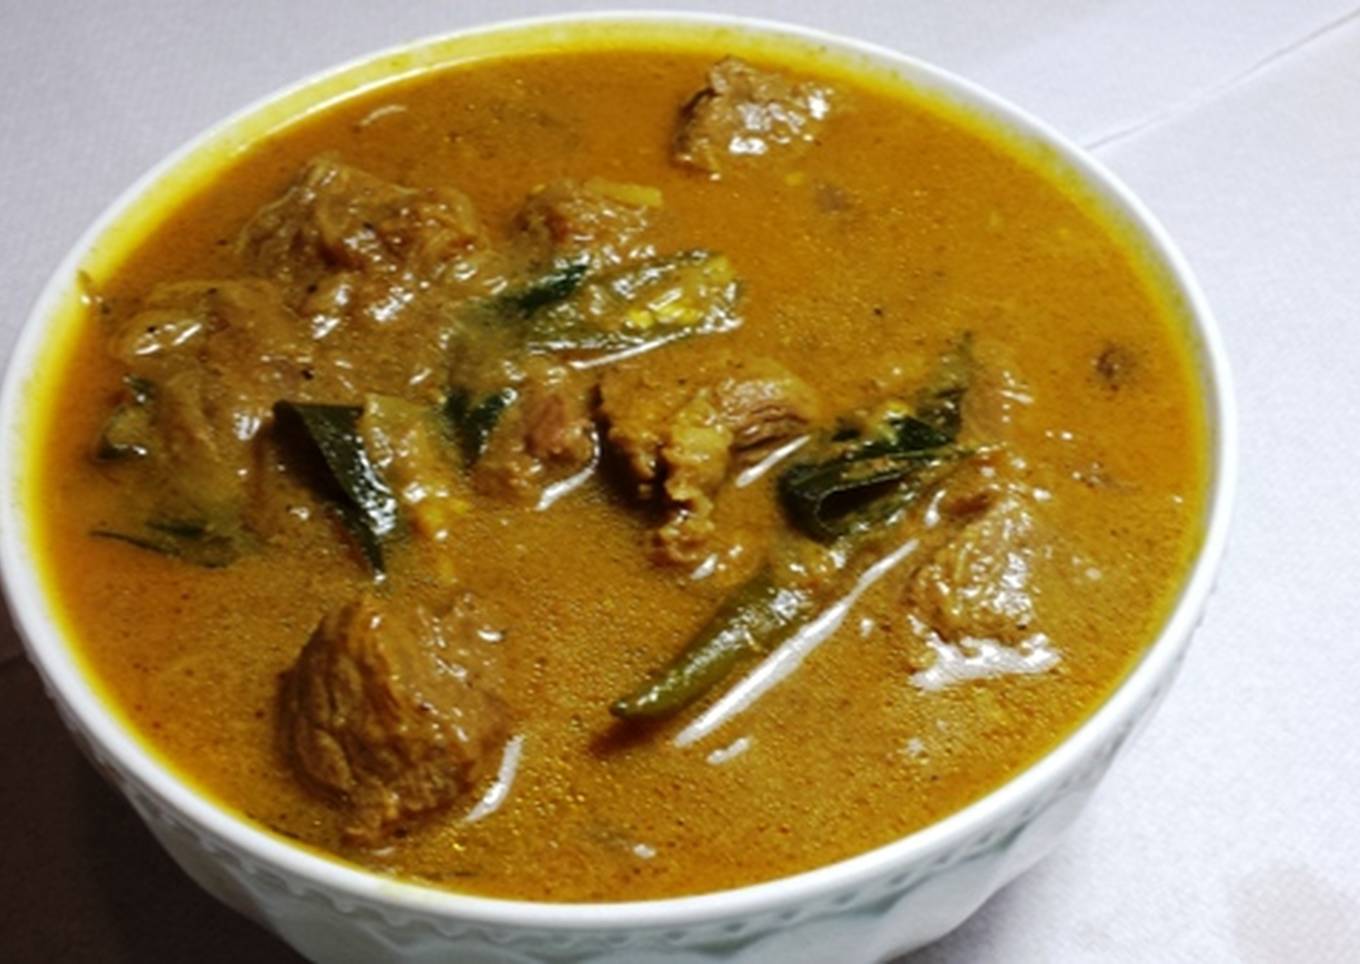 kerala beef curry